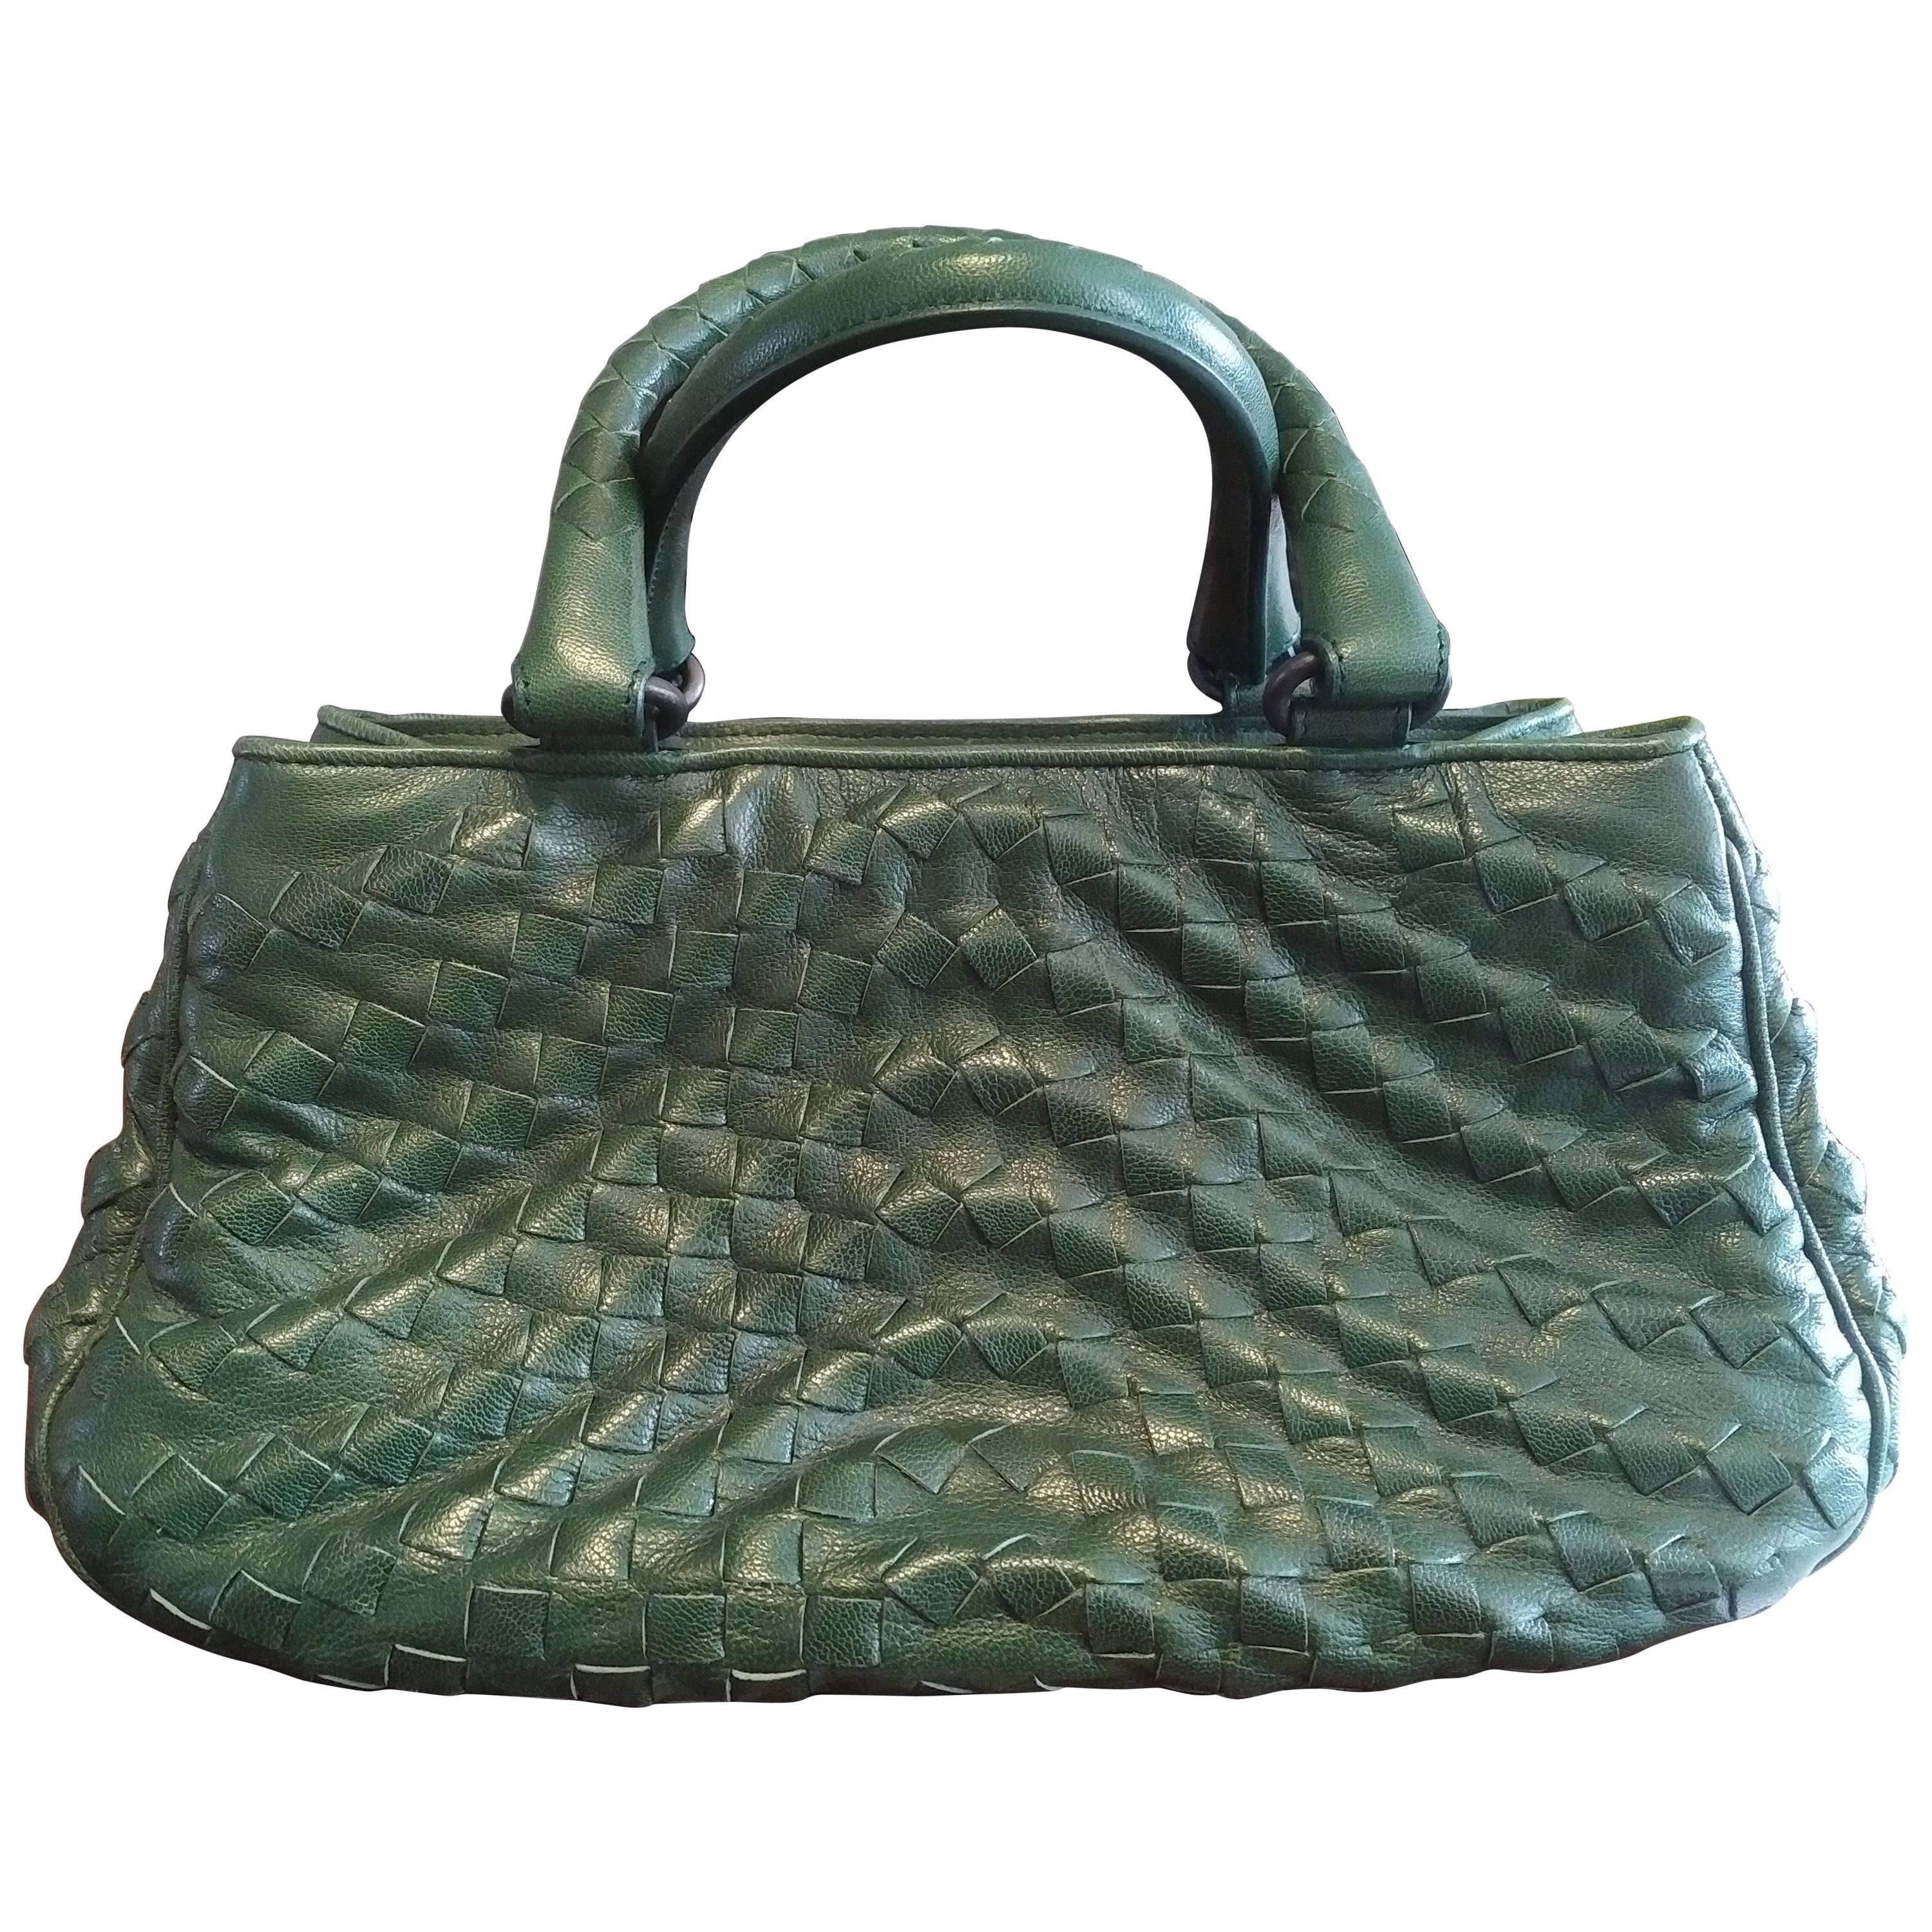 Bottega Veneta Irish Green Intrecciato Nappa Leather Handbag, 2008 